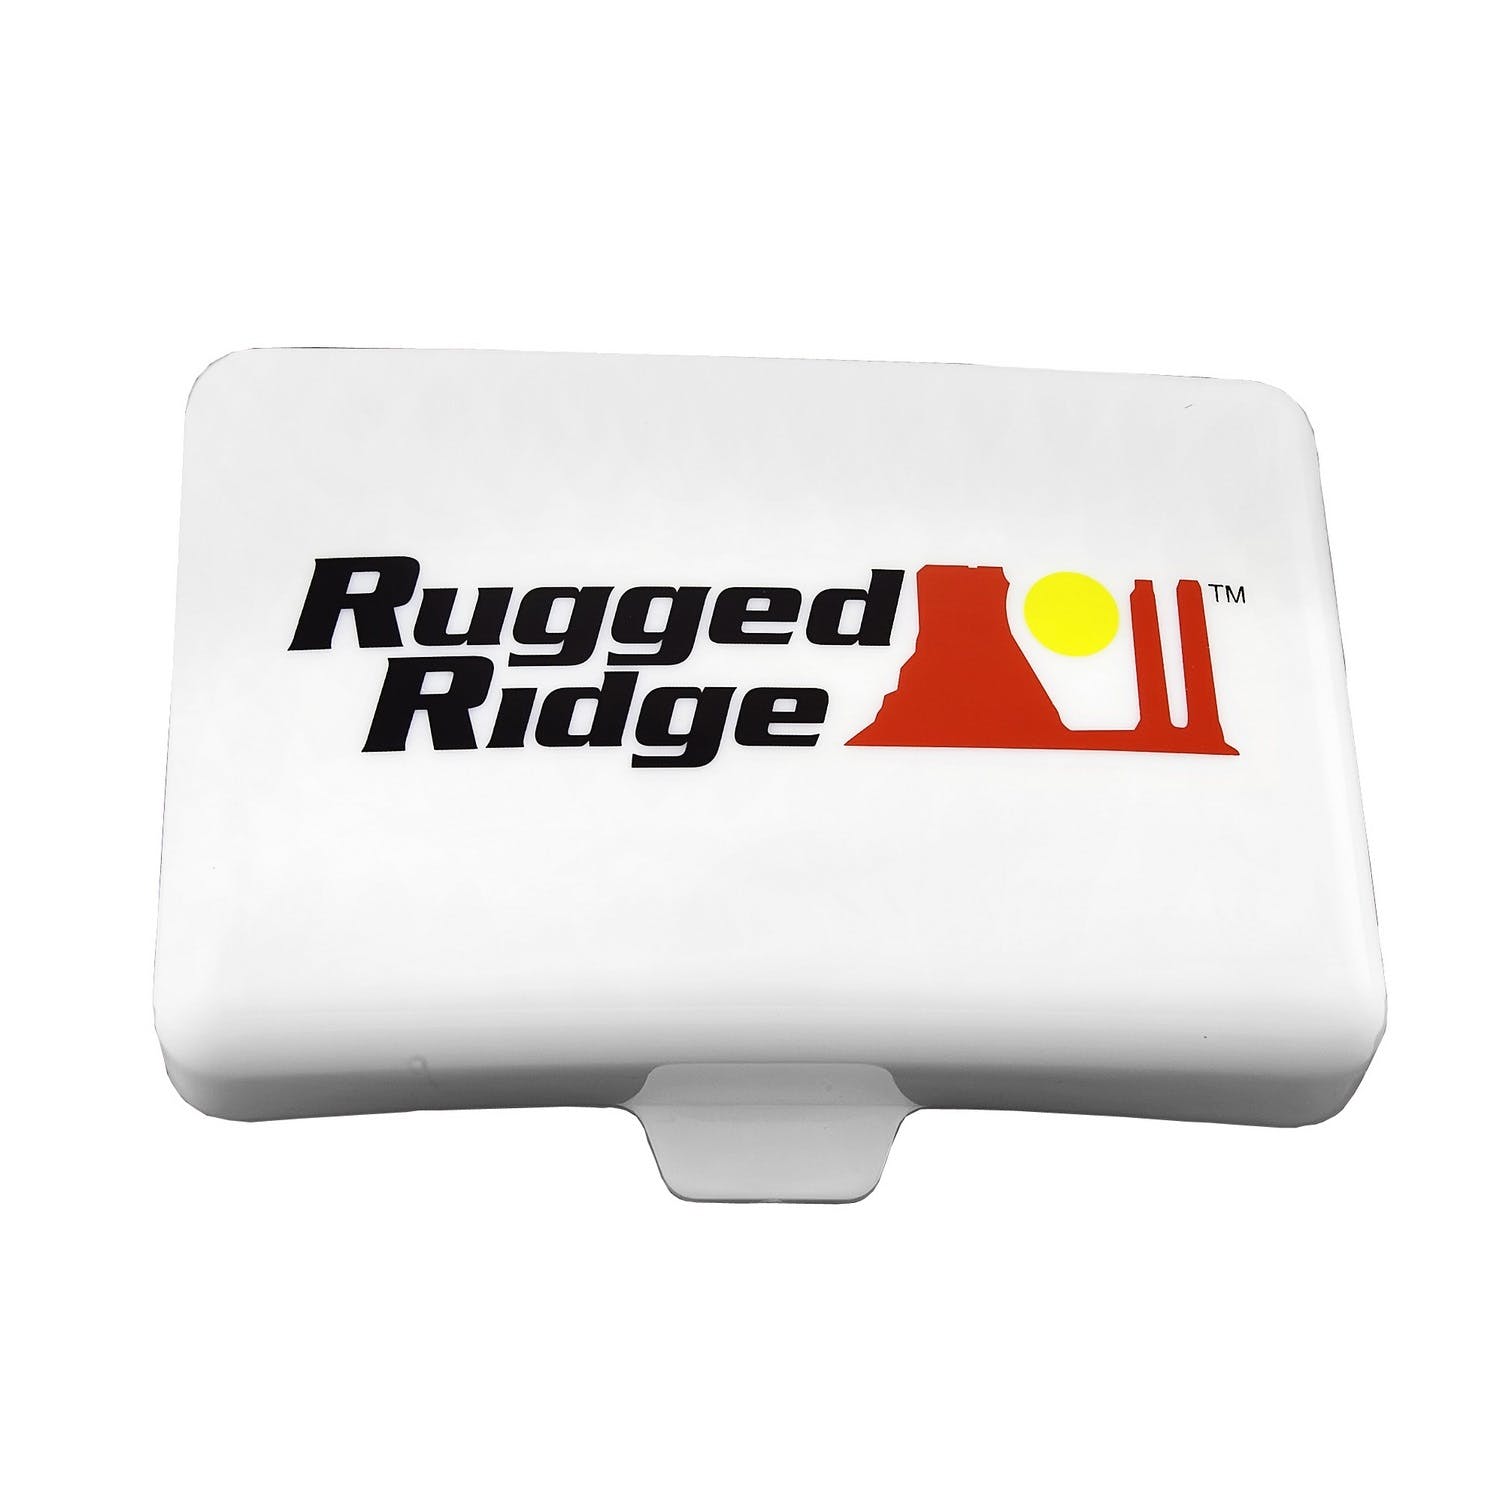 Rugged Ridge 15210.56 5 Inch x 7 Inch Rectangular Off Road Light Cover; White